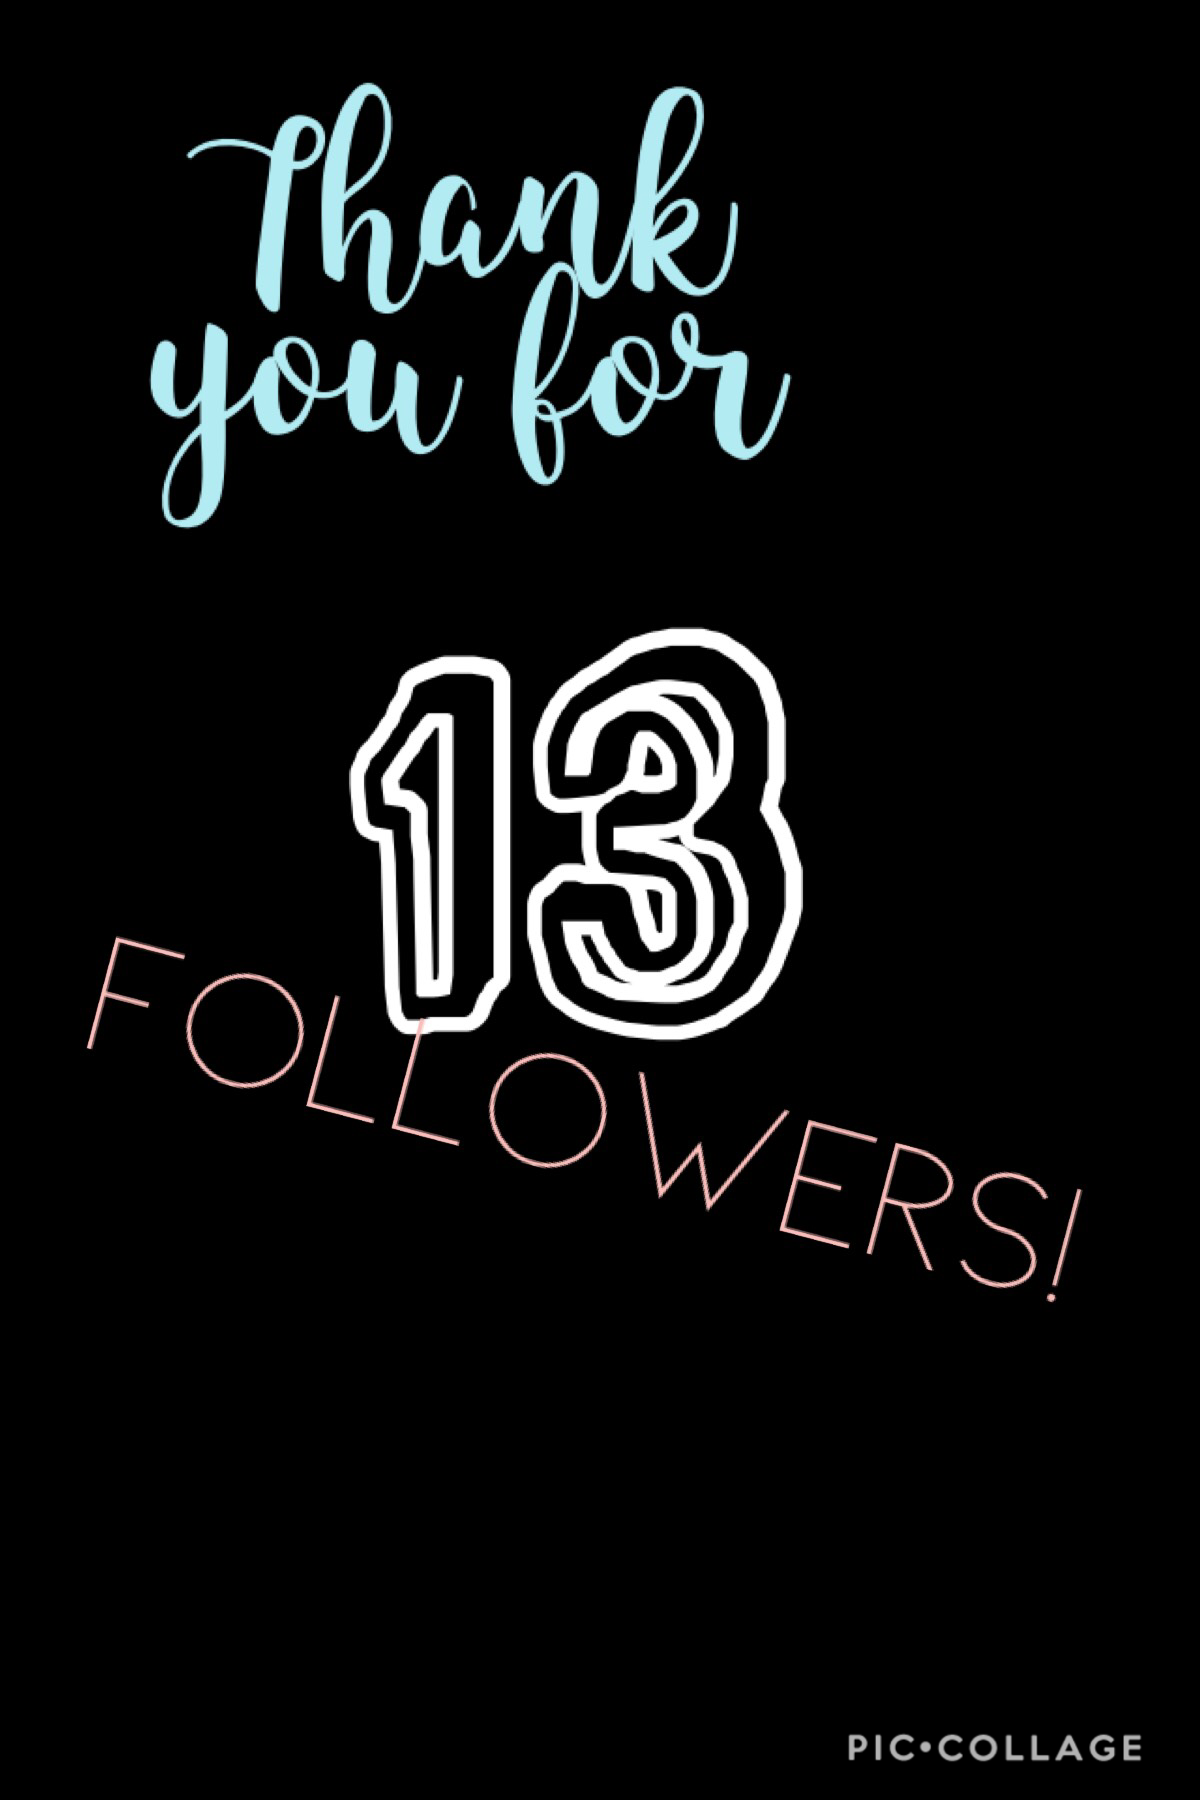 13 Followers!!!